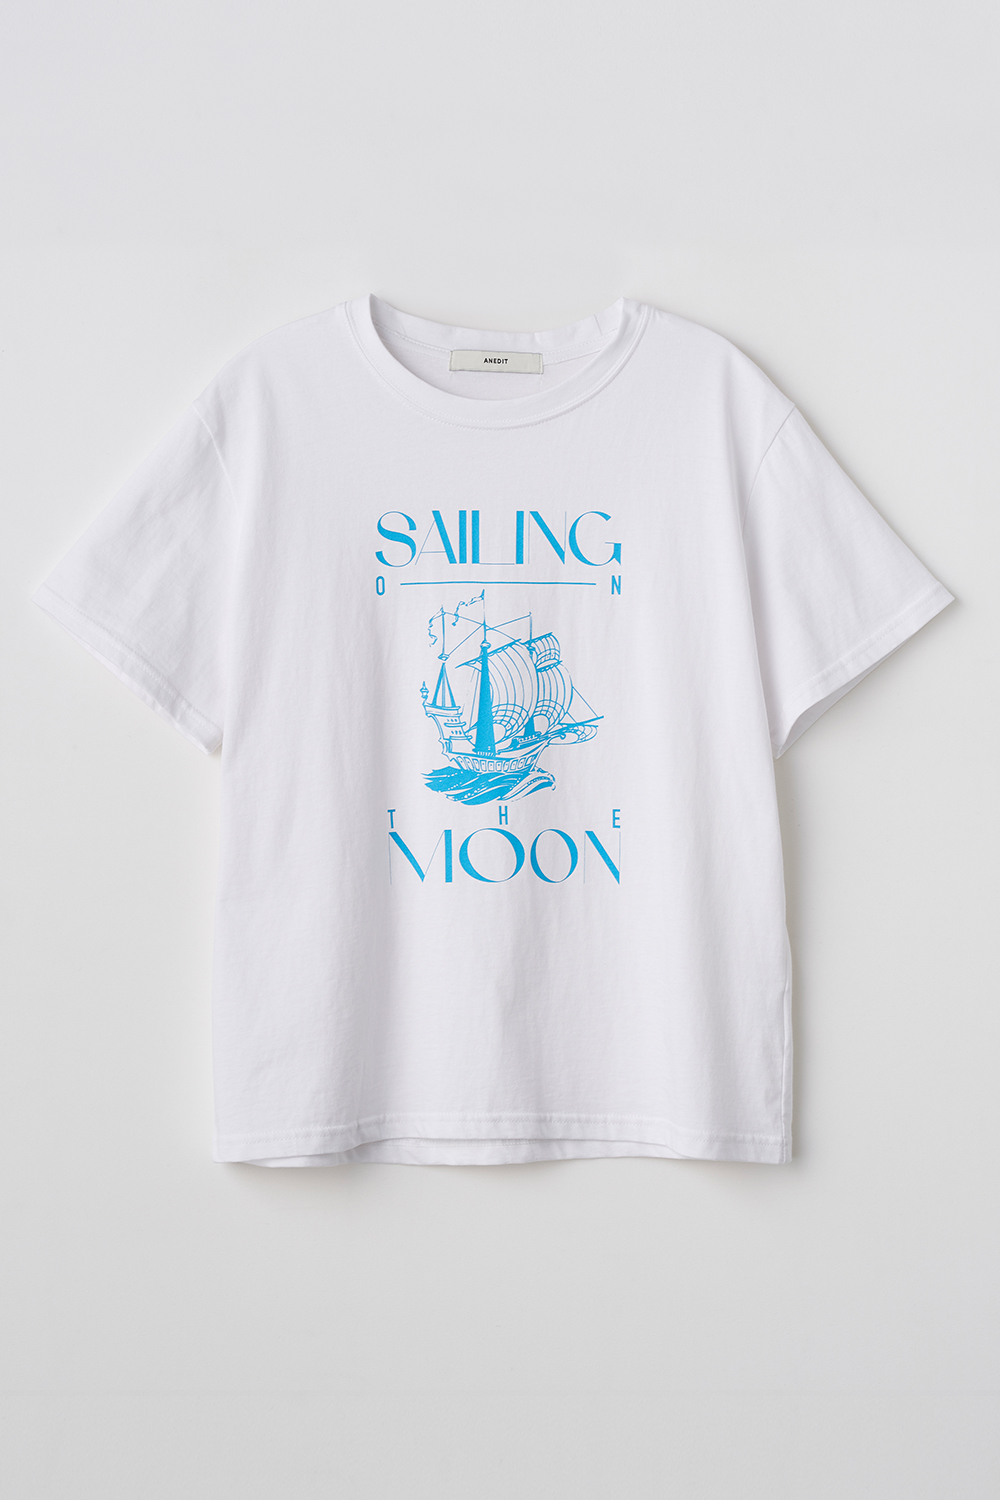 Sailing Moon Tshirt_WH